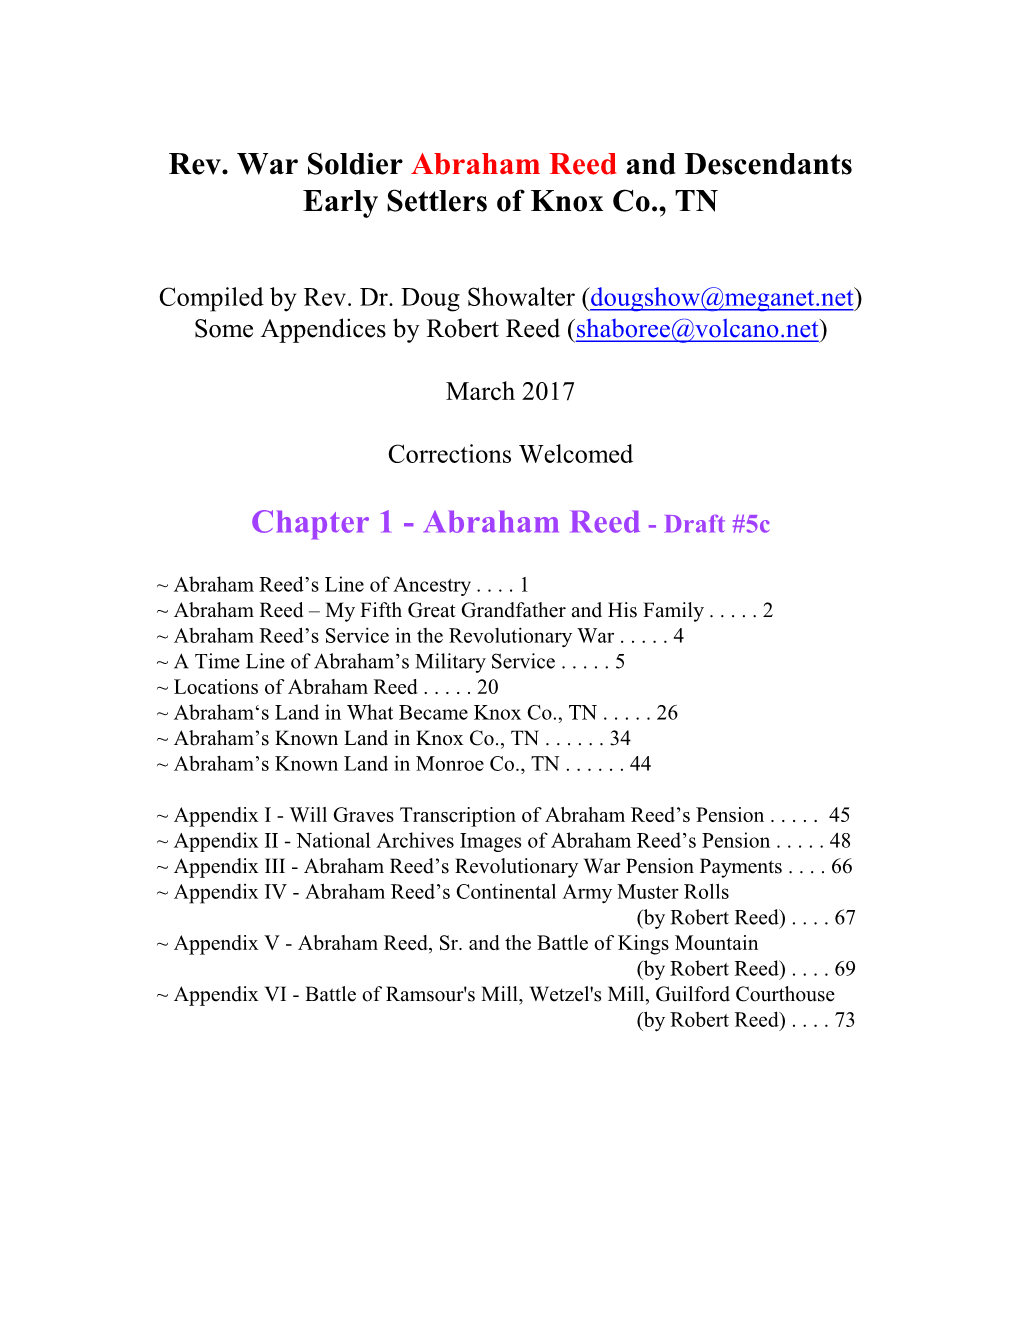 Chapter 1 - Abraham Reed - Draft #5C